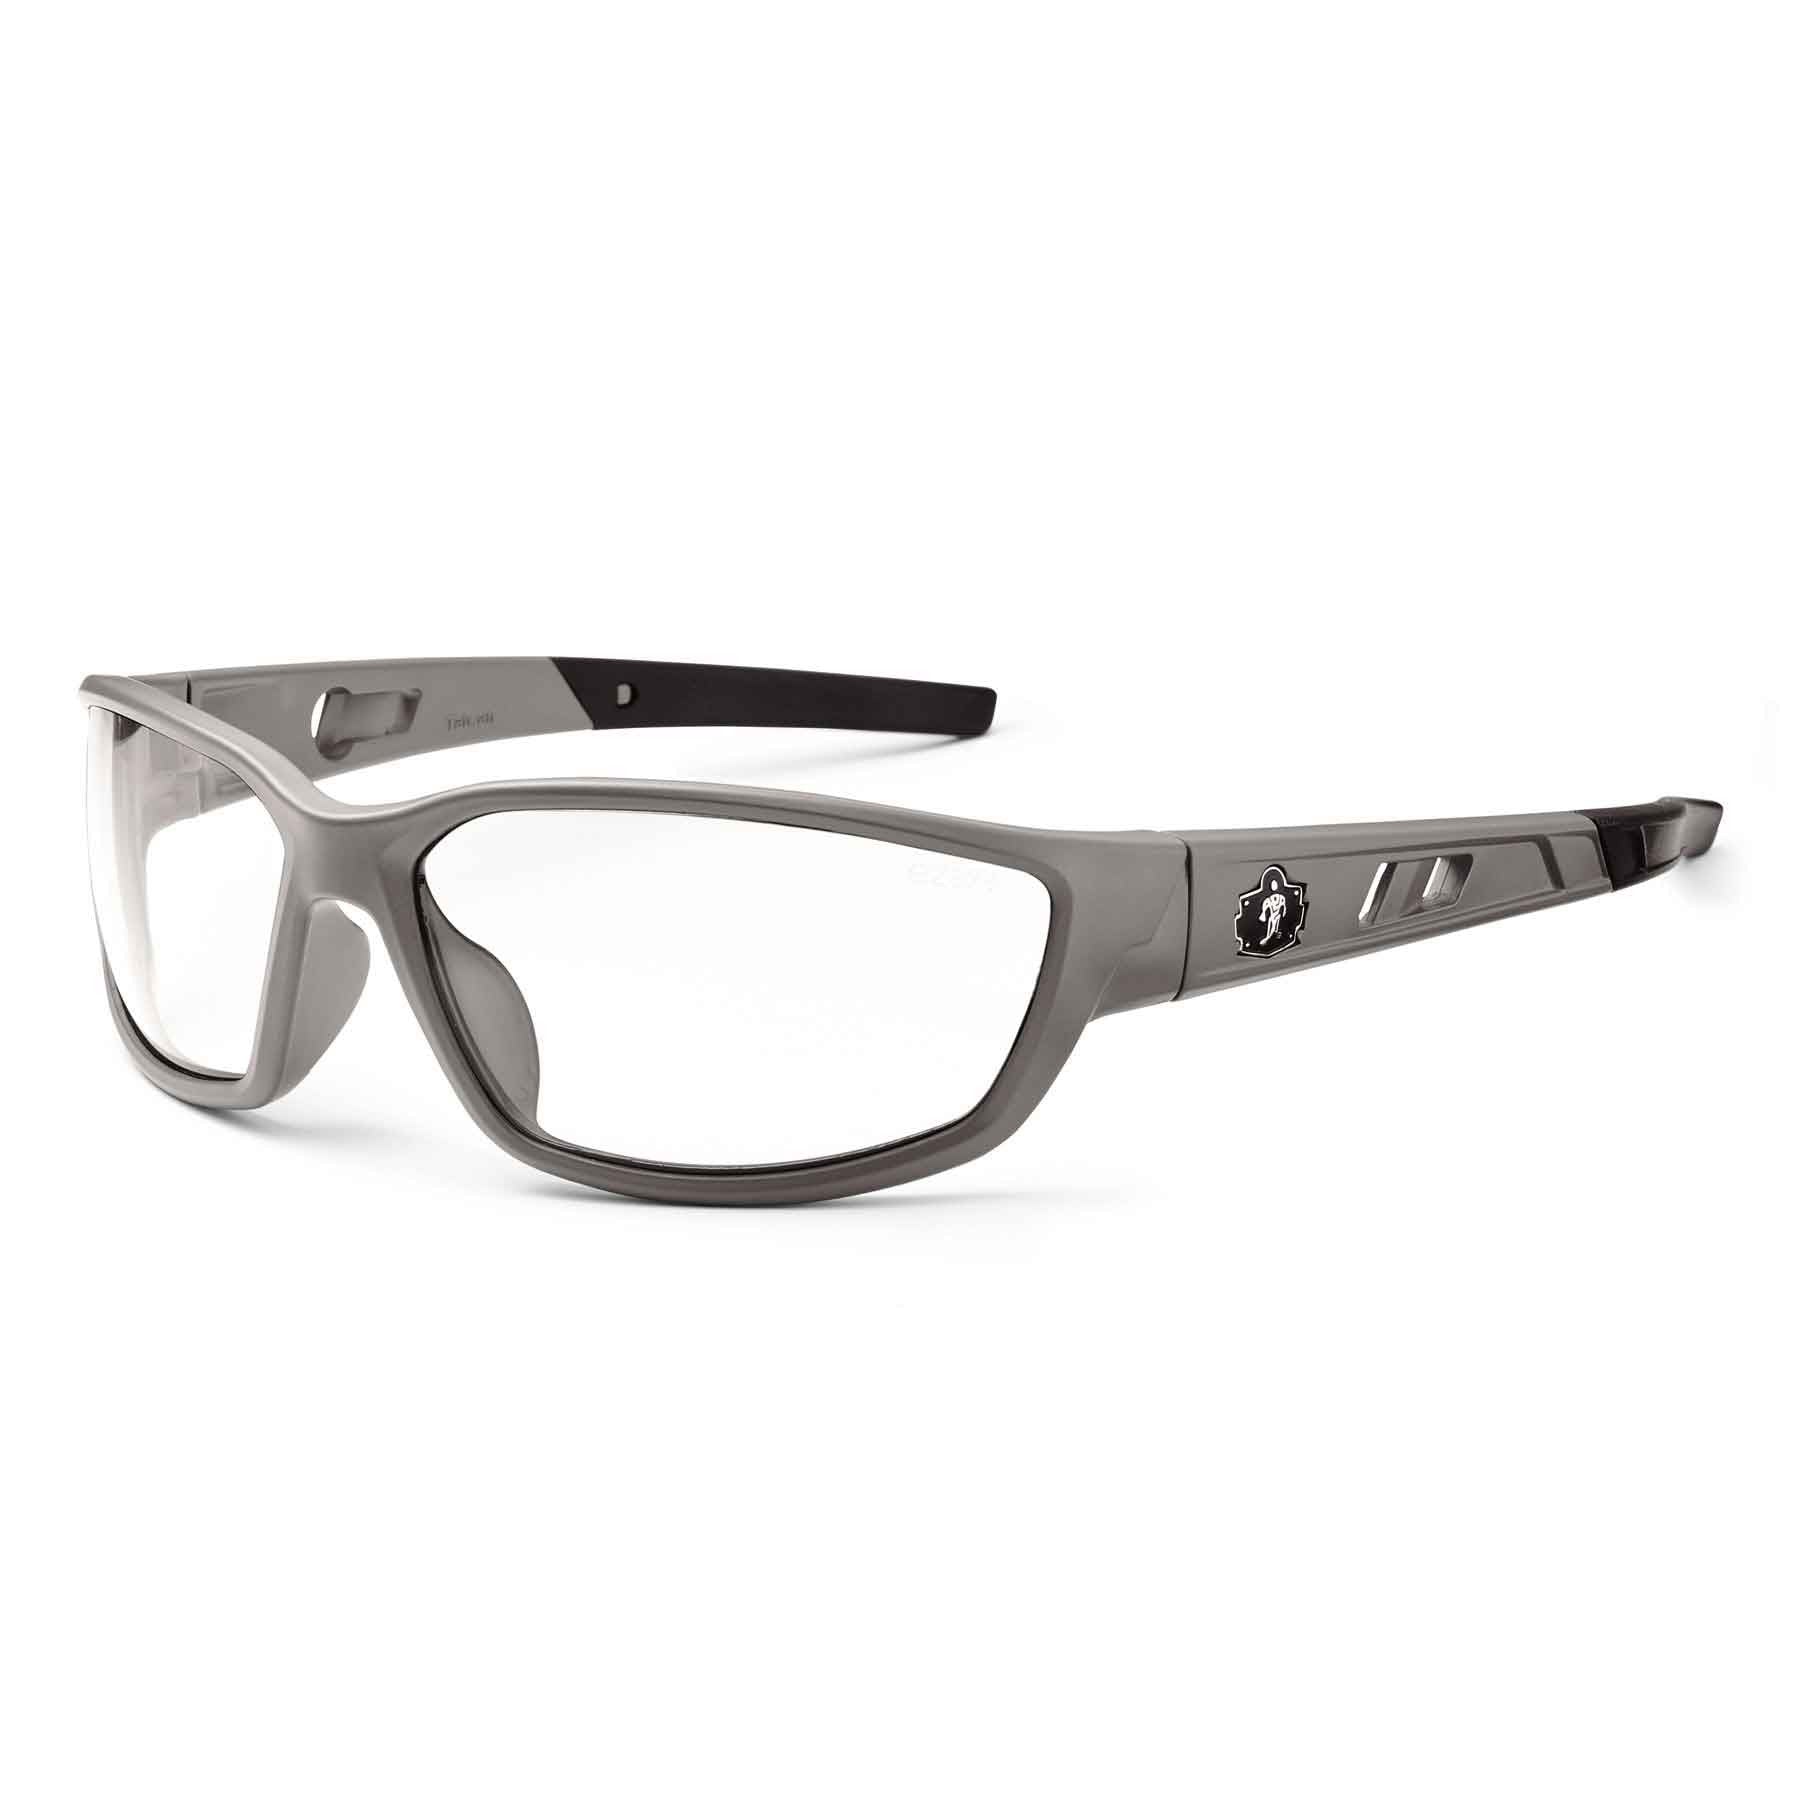 Skullerz Kvasir Safety Glasses-eSafety Supplies, Inc